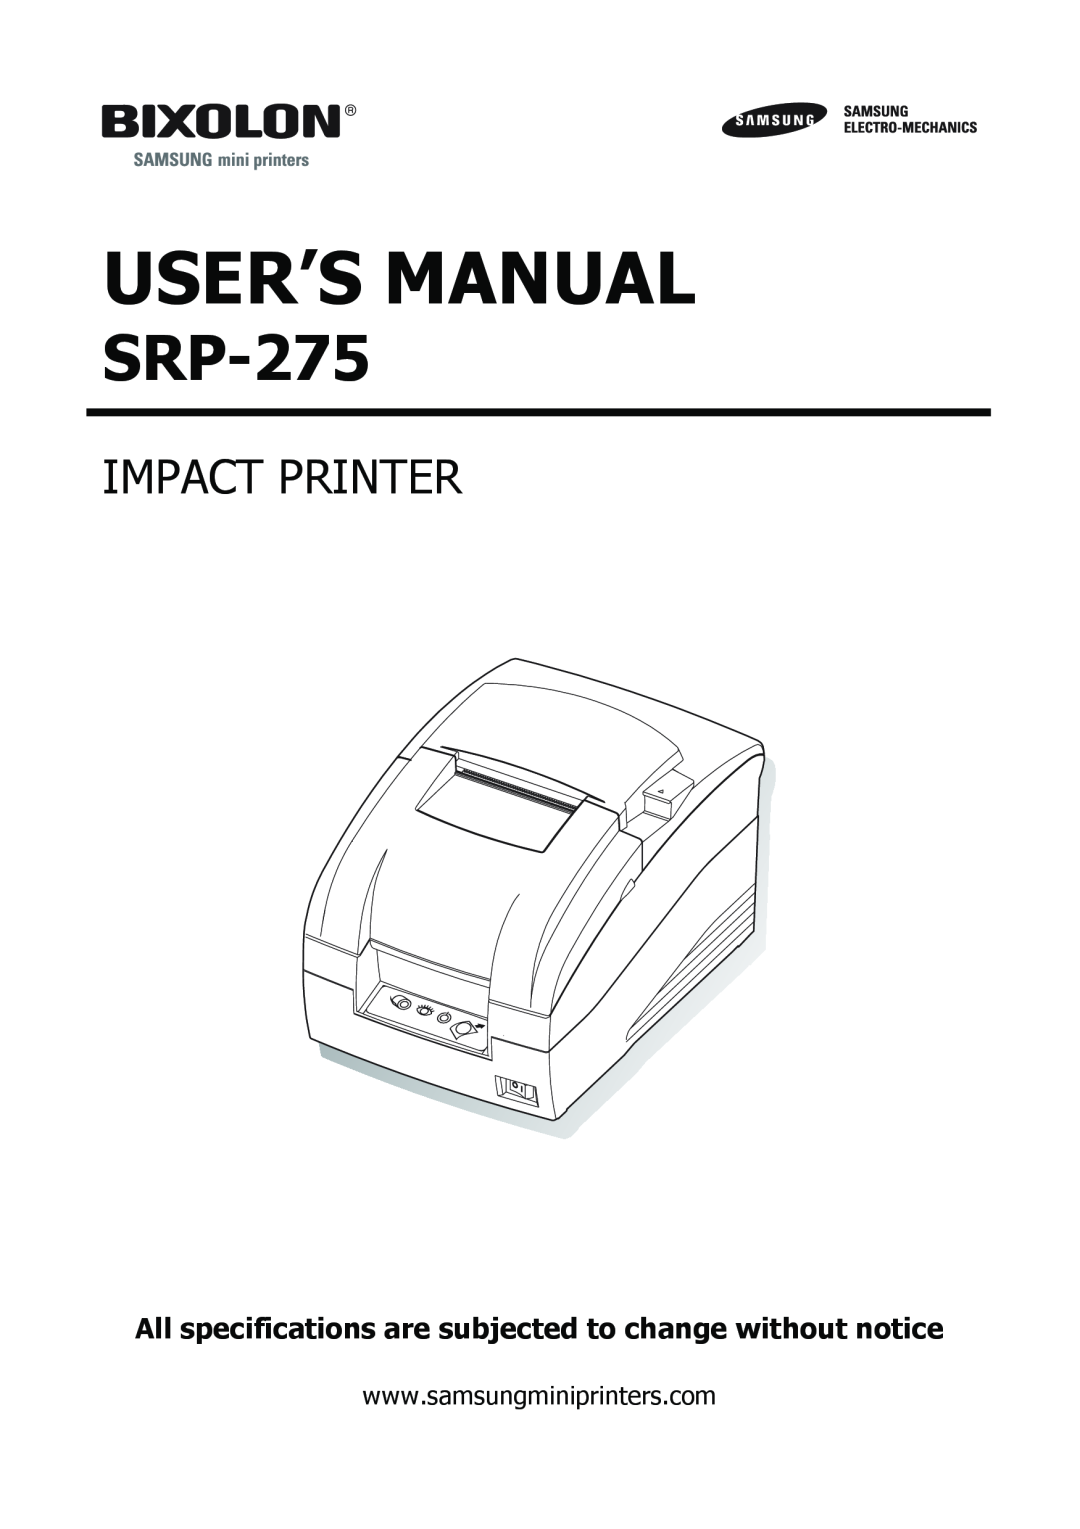 Samsung SRP275APG user manual User’S Manual, SRP-275, Impact Printer 